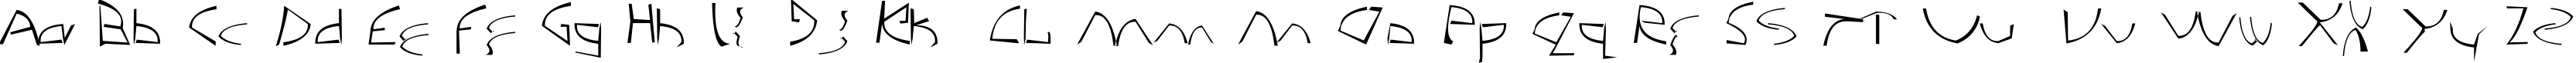 Пример написания английского алфавита шрифтом ChiTown-Light